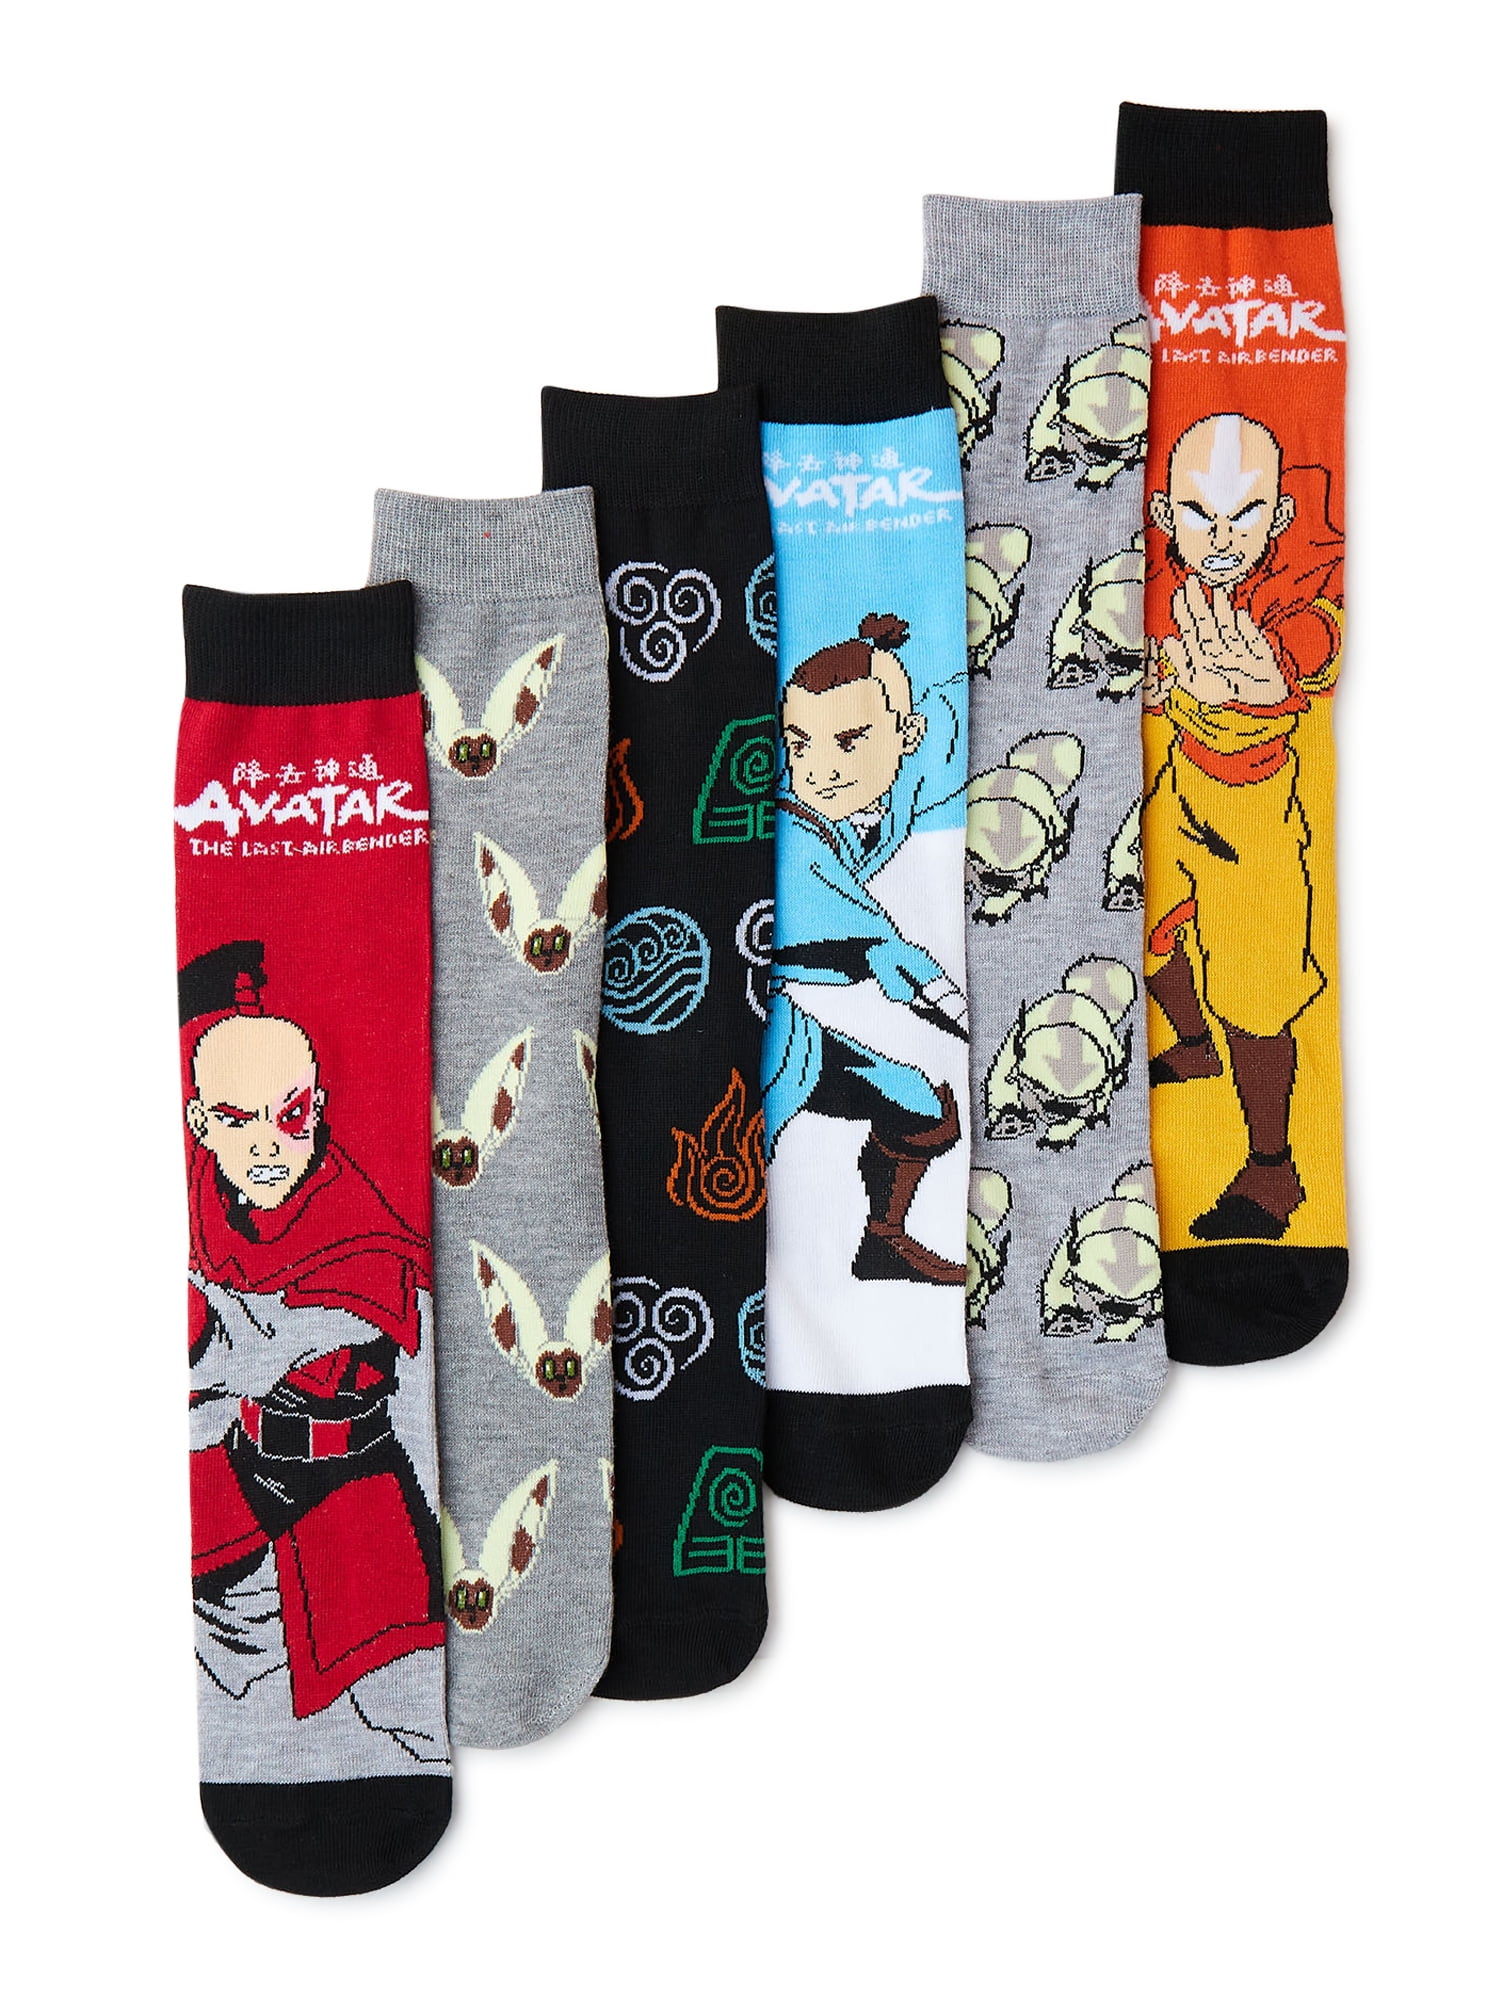 Avatar The Last Airbender Mens Socks, 6-Pack